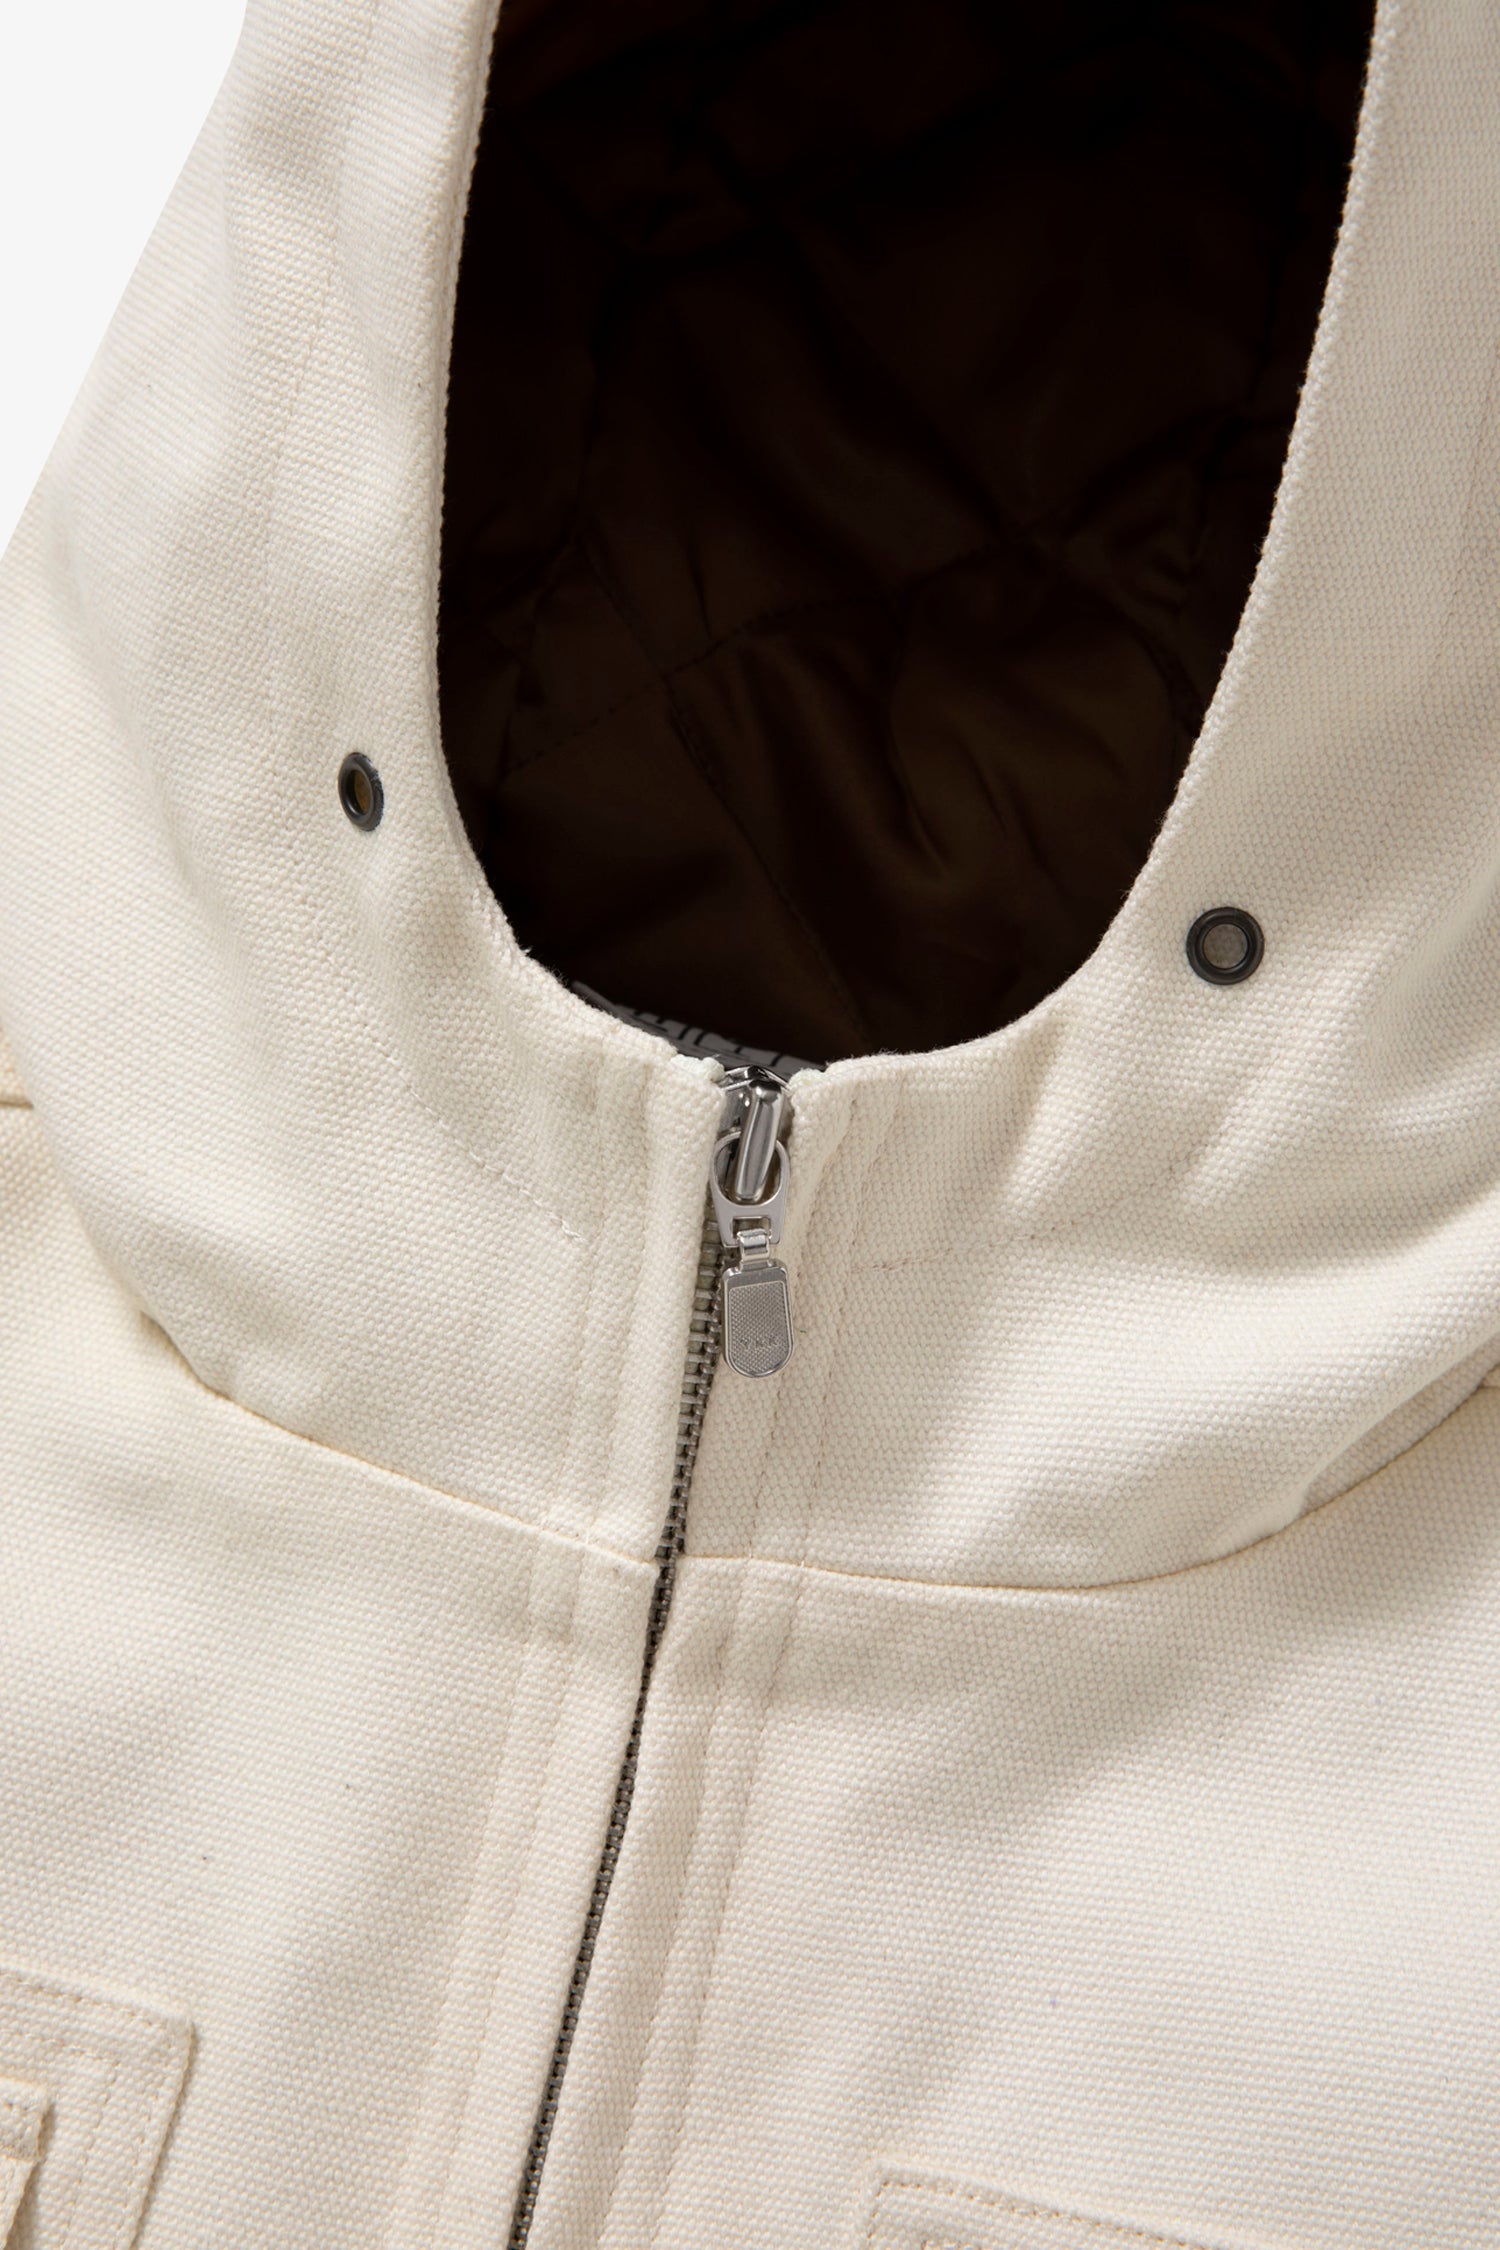 Selectshop FRAME - BLACKEYEPATCH Hooded Painter Jacket Outerwear Dubai